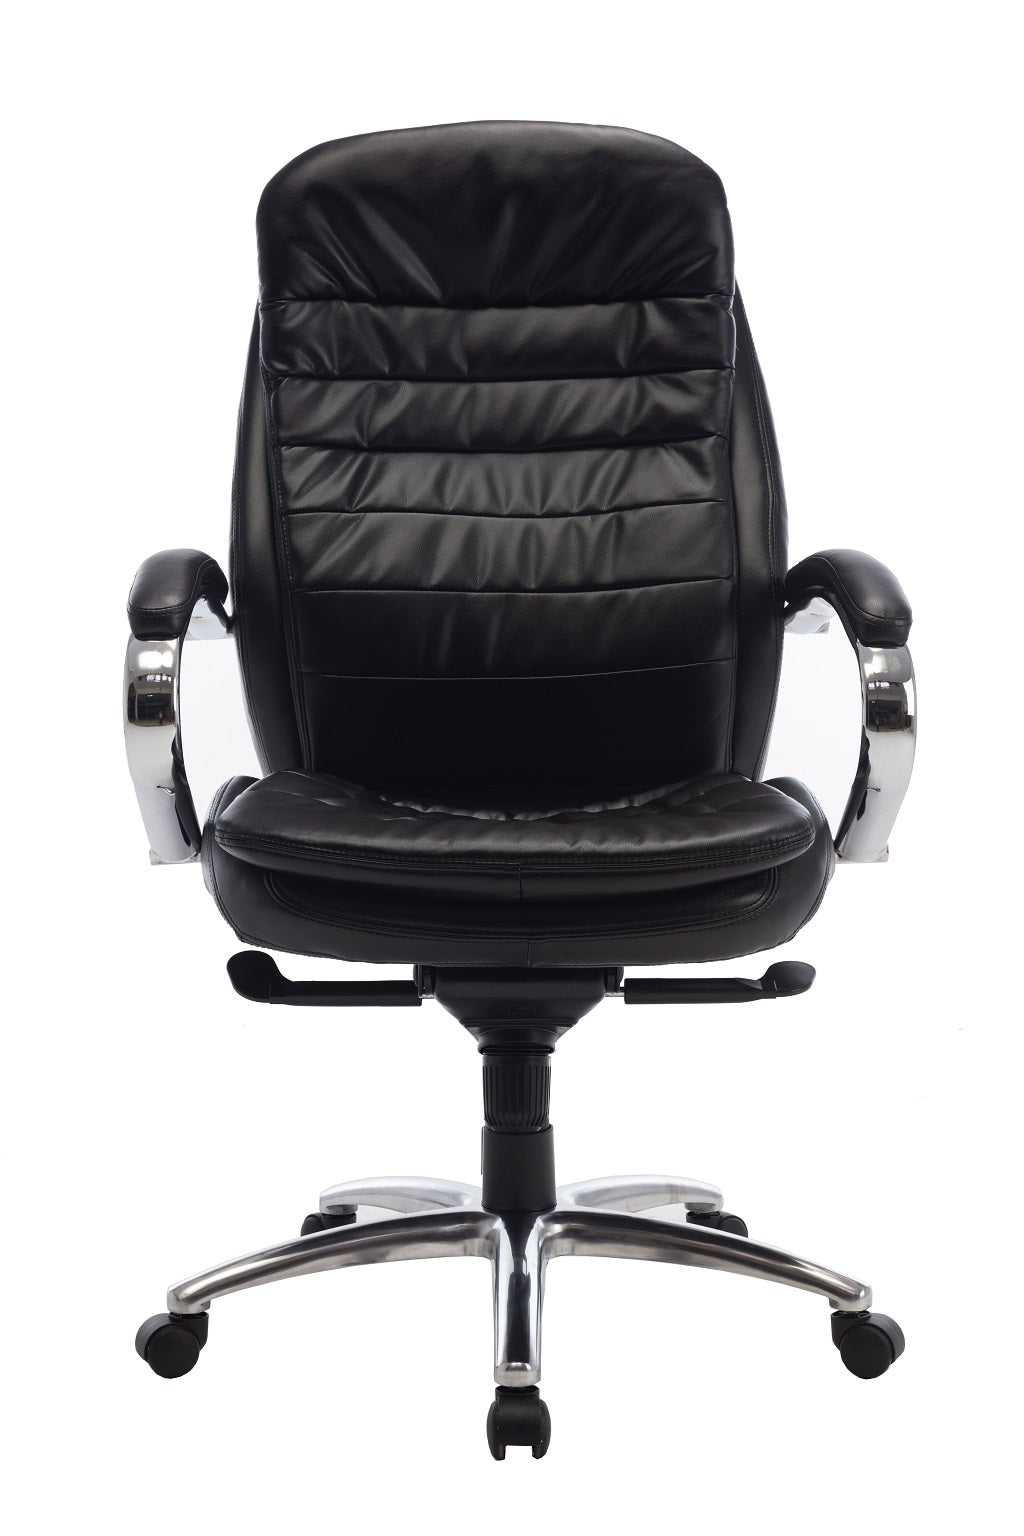 ViscoLogic Splendor Padded Seat and High Backrest Executive Home Office Desk Chair (Black)